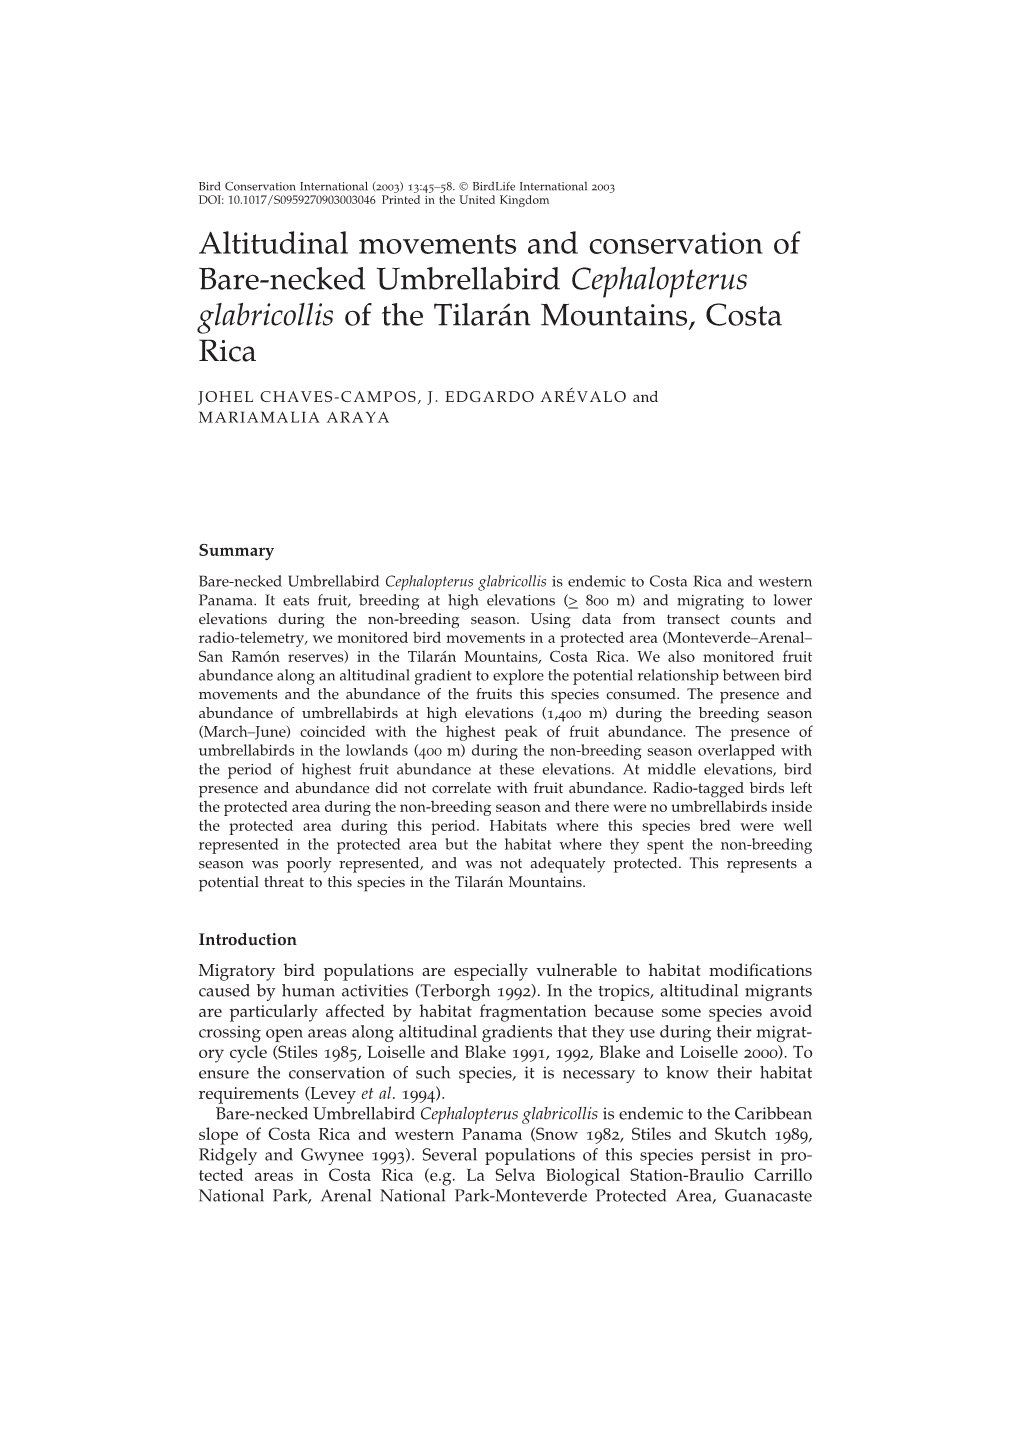 Altitudinal Movements and Conservation of Bare-Necked Umbrellabird Cephalopterus Glabricollis of the Tilara´N Mountains, Costa Rica